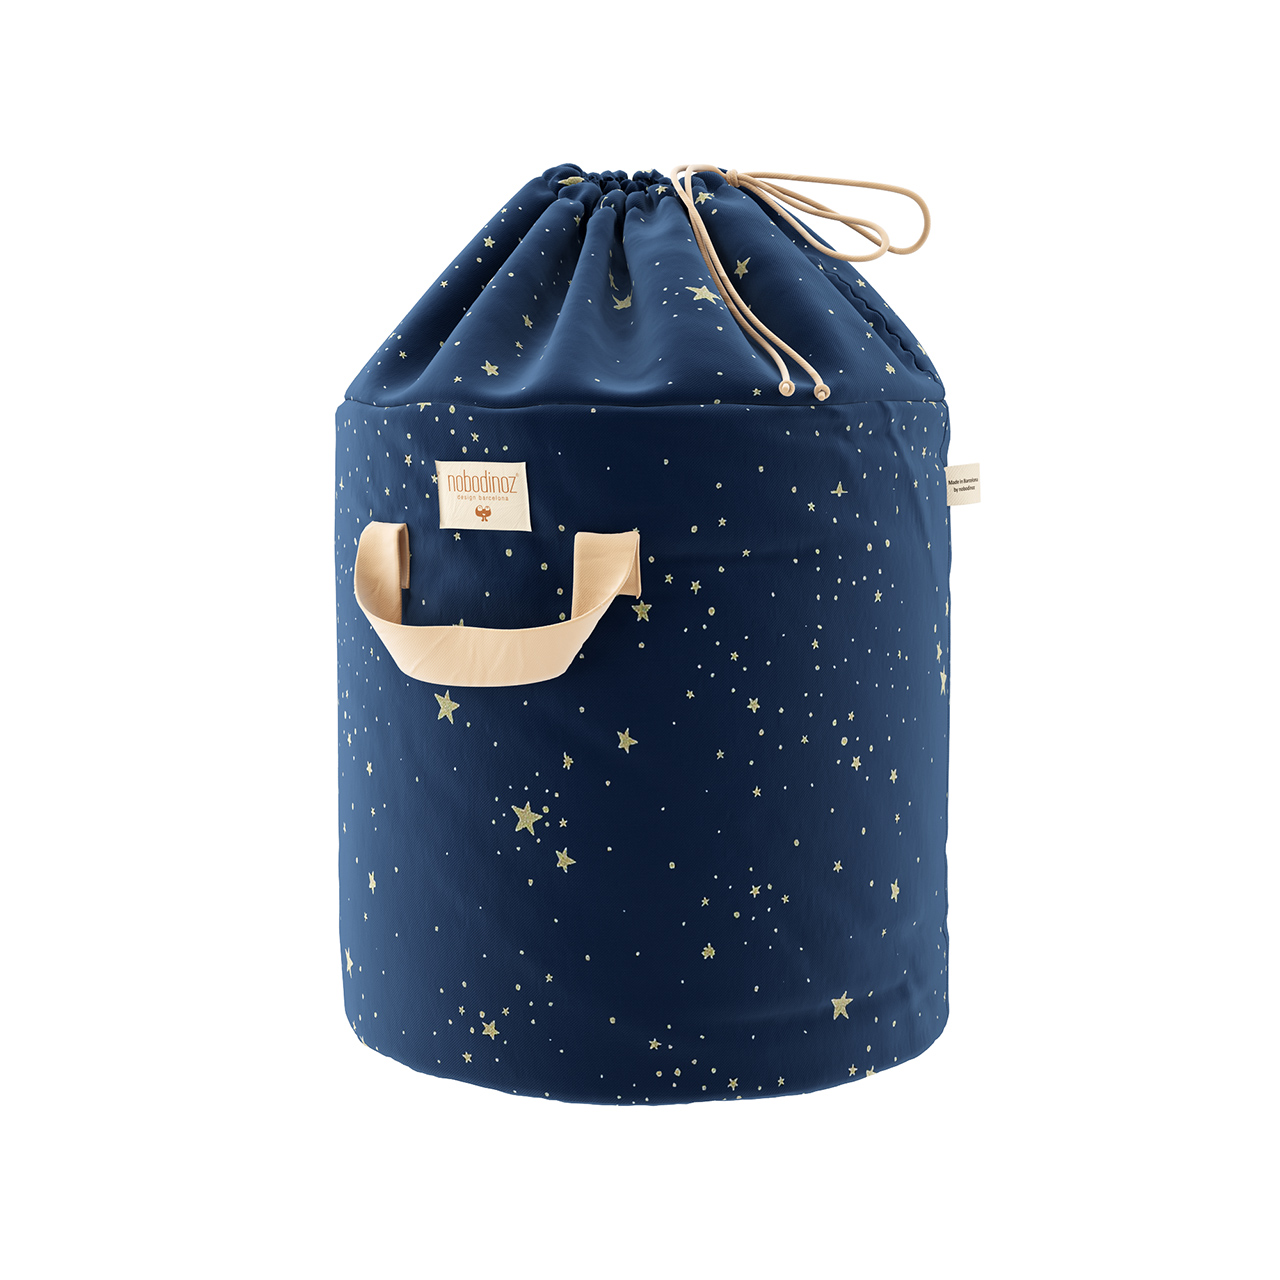 toy-bag-bamboo-gold-stella-night-blue-by-nobodinoz.jpg